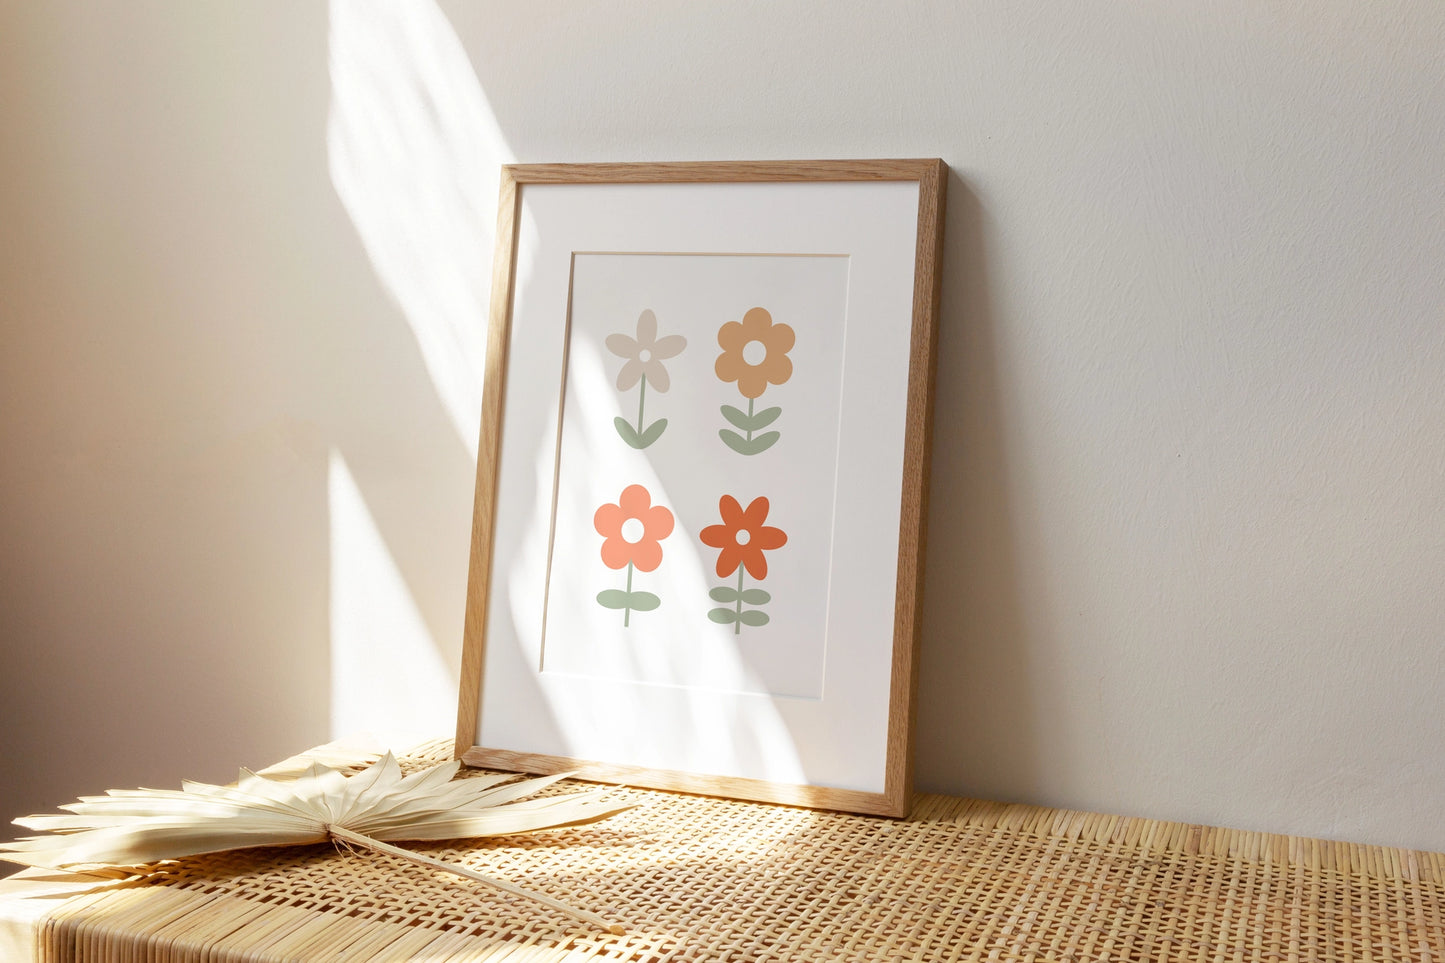 Daisy Flower Pattern A5 Print